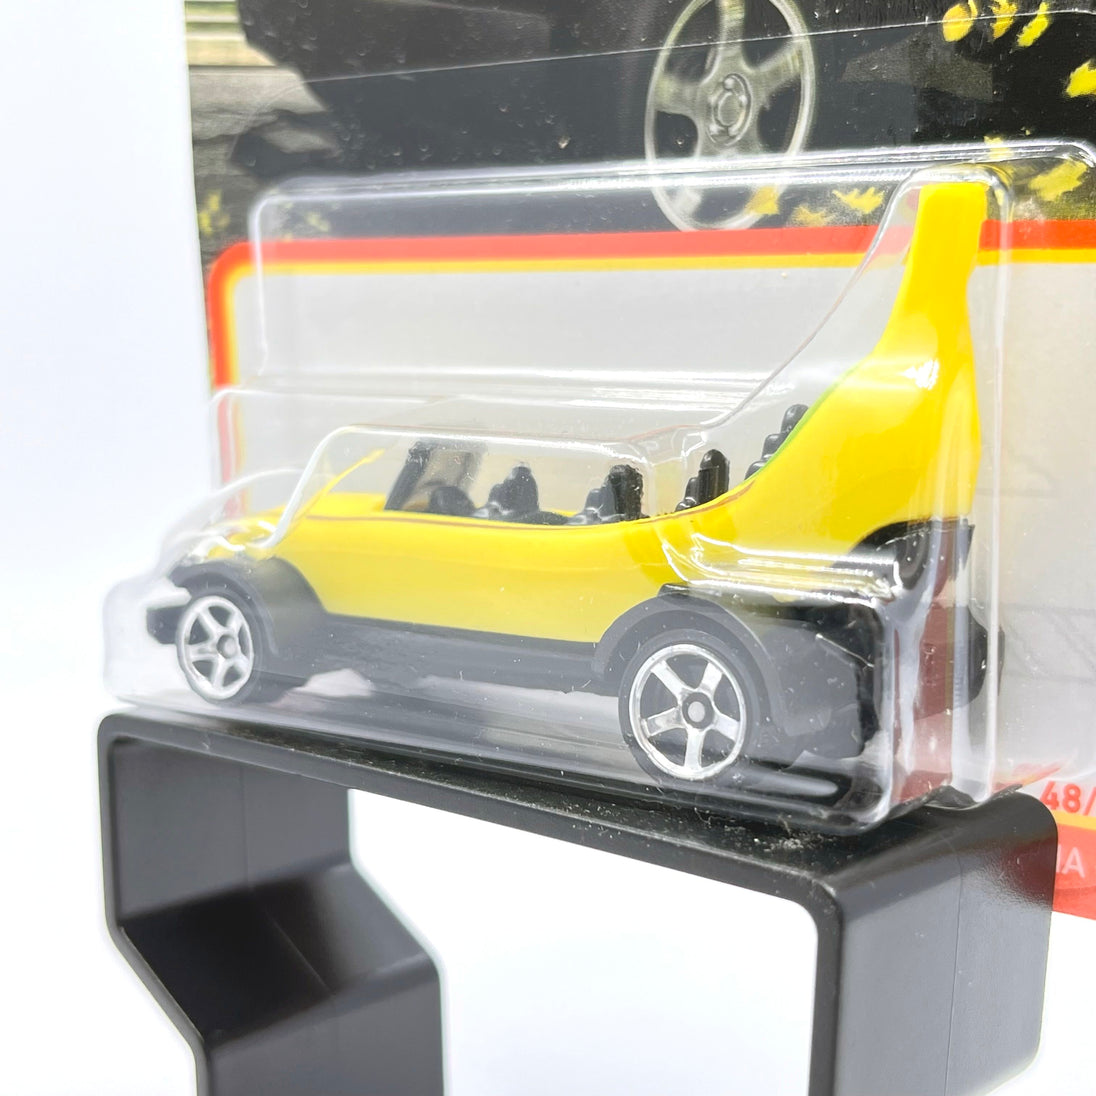 Big Banana Car Rare MatchBox Alloy Diecast Car Model